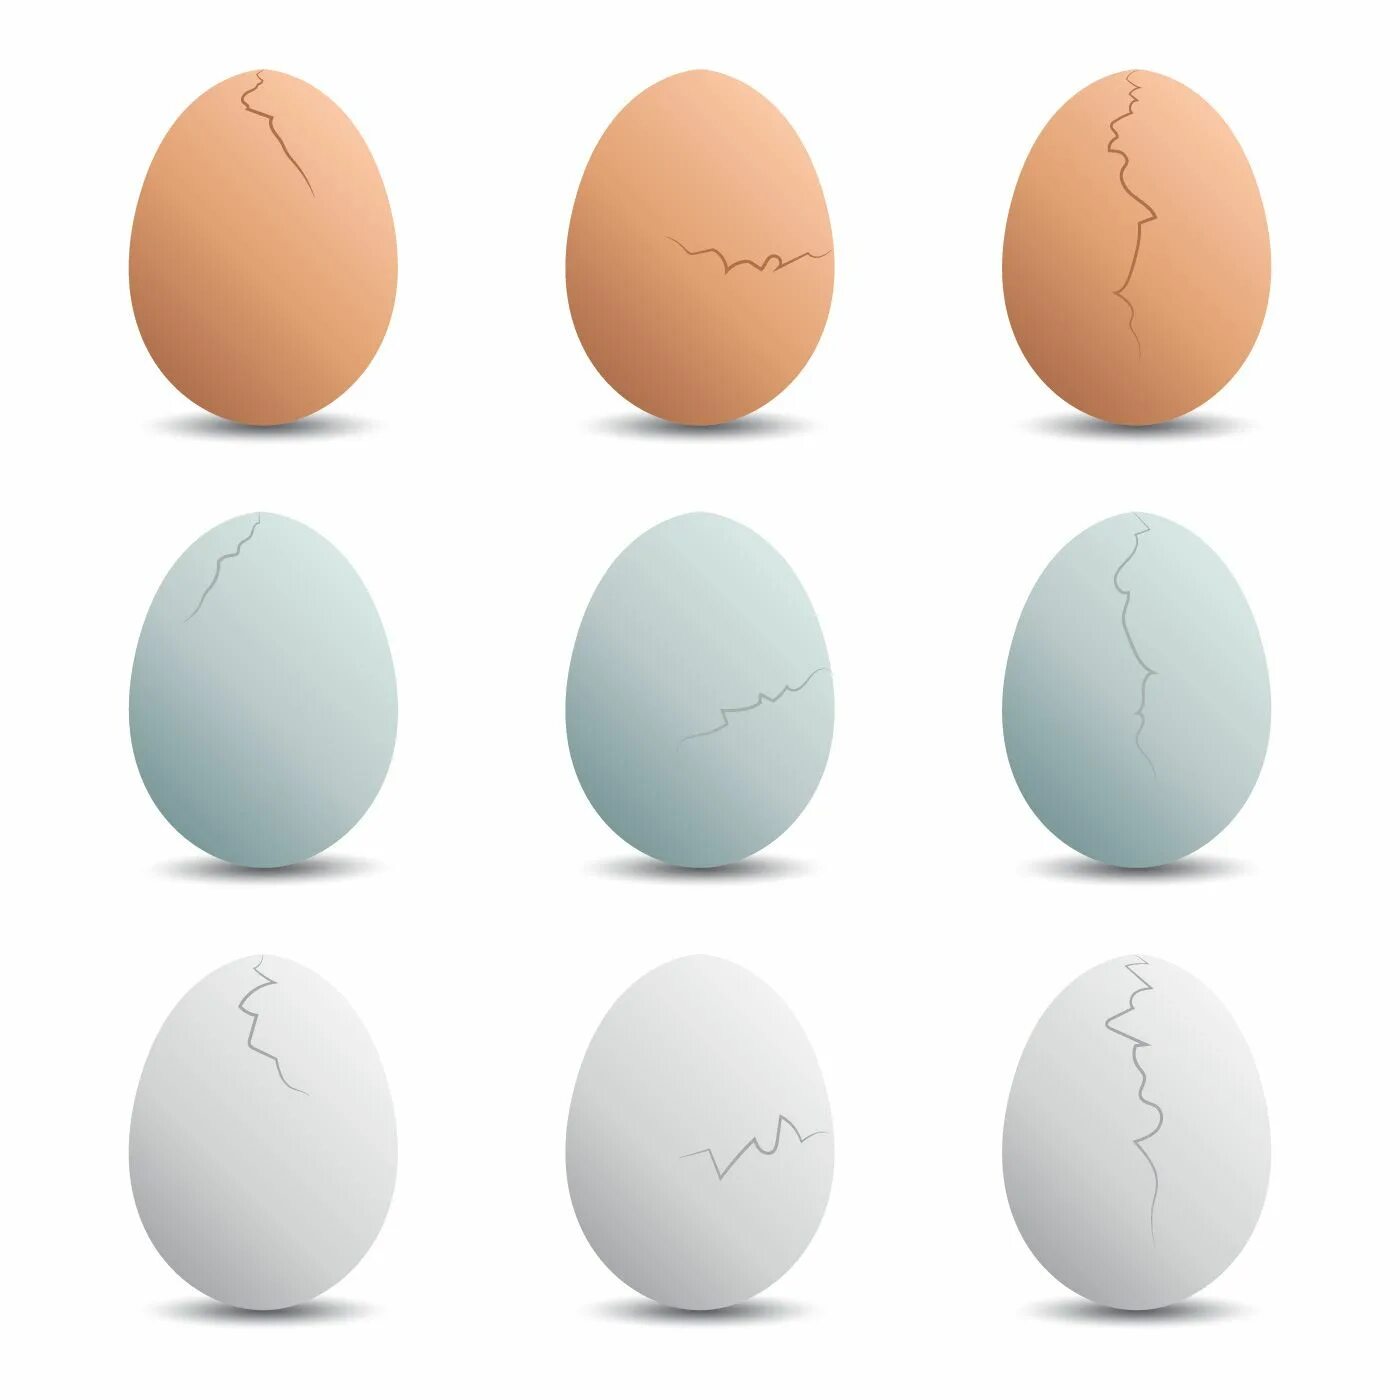 Яйцо трещина. Яйцо вектор. Треснутое яйцо. Треснутое яйцо вектор. Яйцо растресканное.